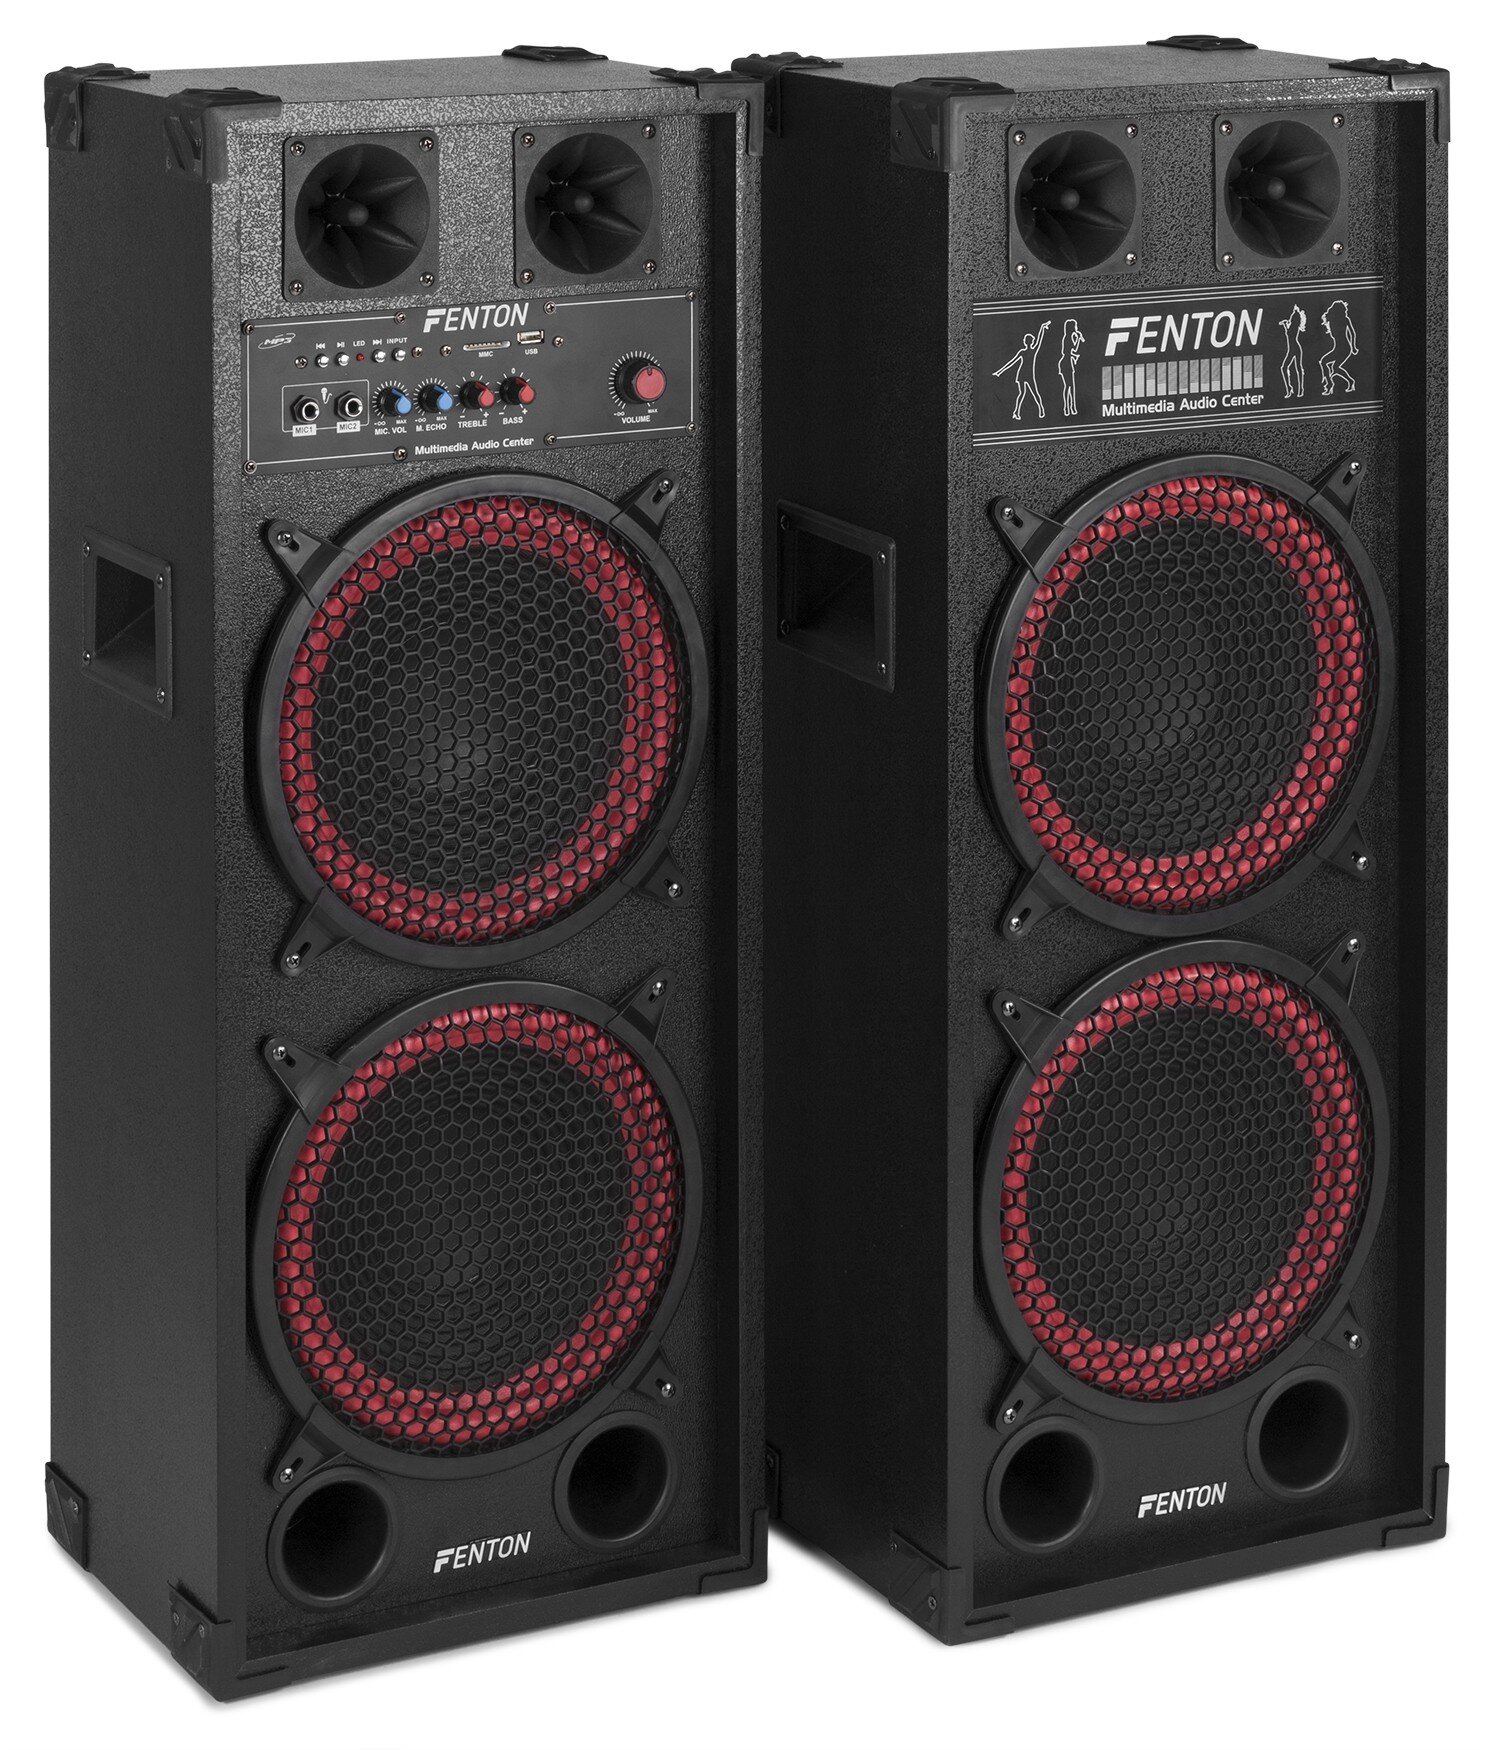 Fenton SPB-210 PA Active Speakerset 2x10"